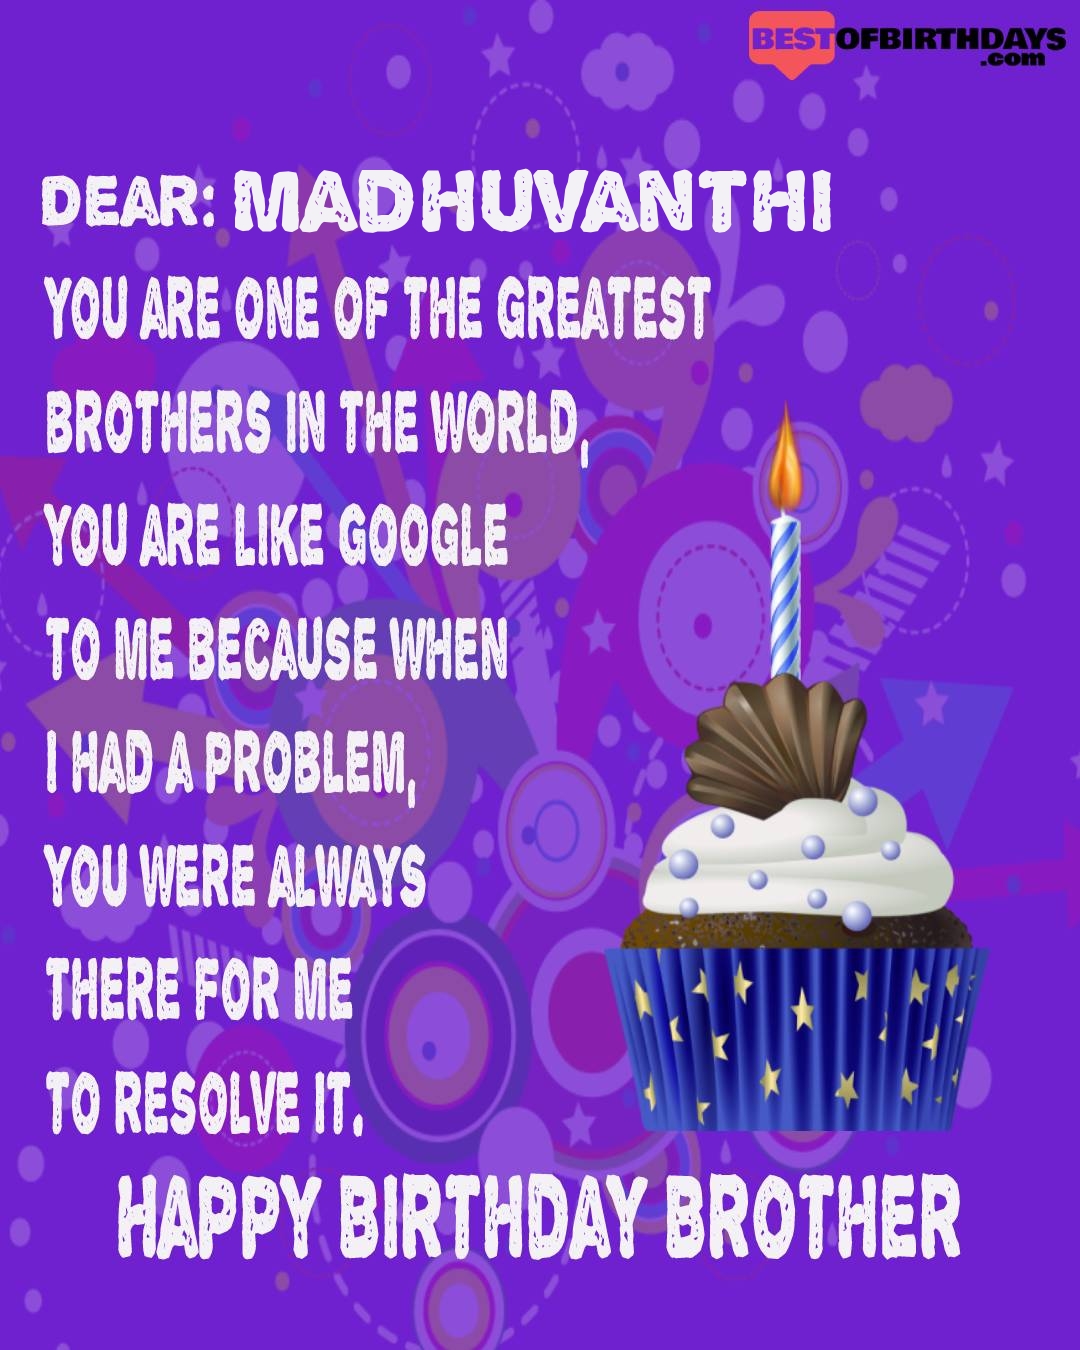 Happy birthday madhuvanthi bhai brother bro